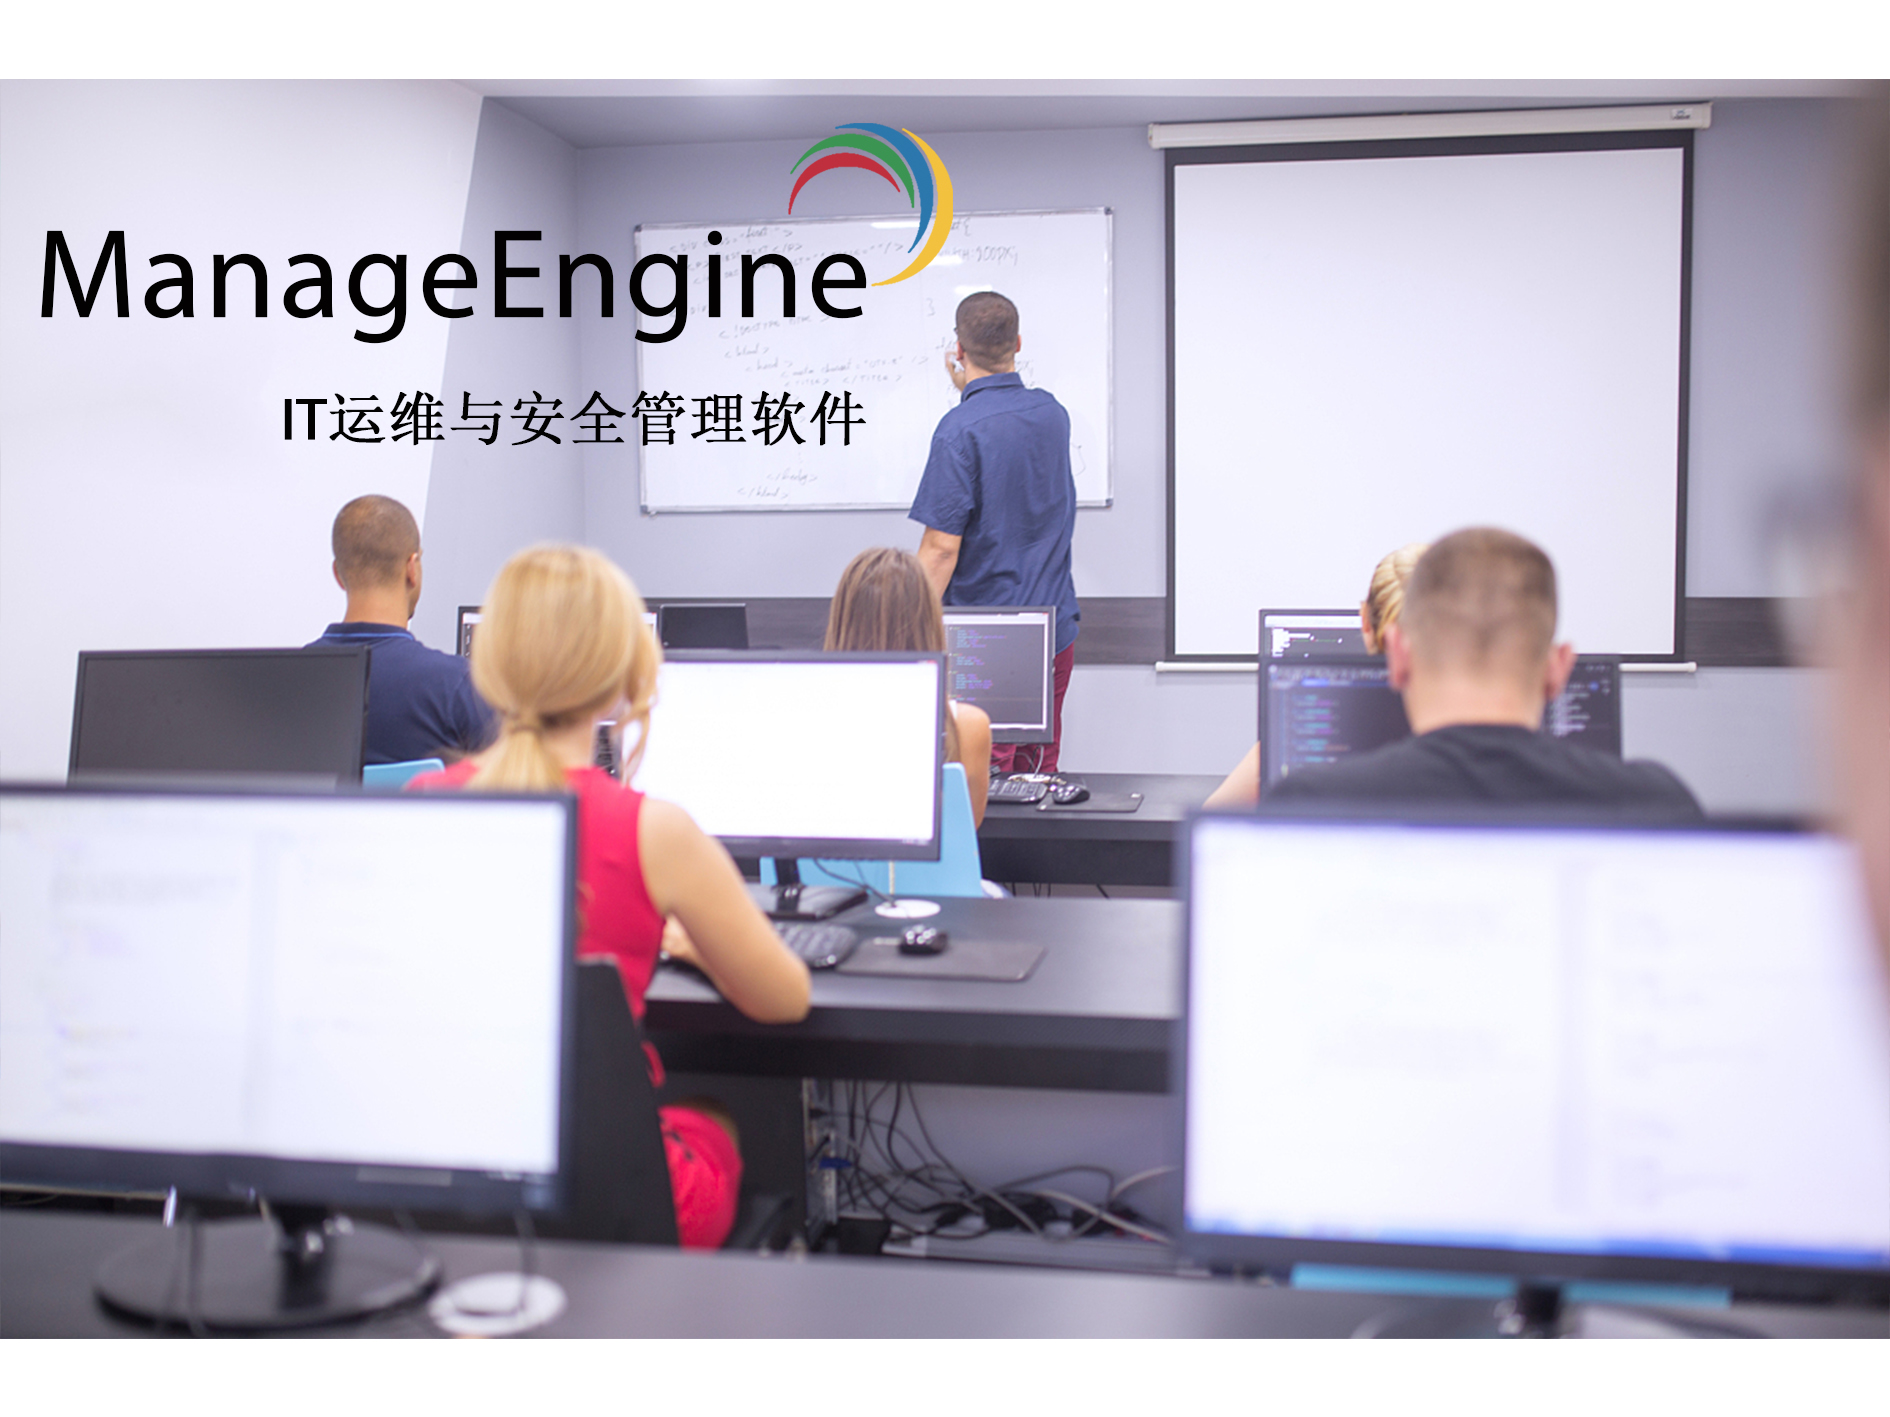 IT资产全生命周期管理 - ManageEngine IT管理